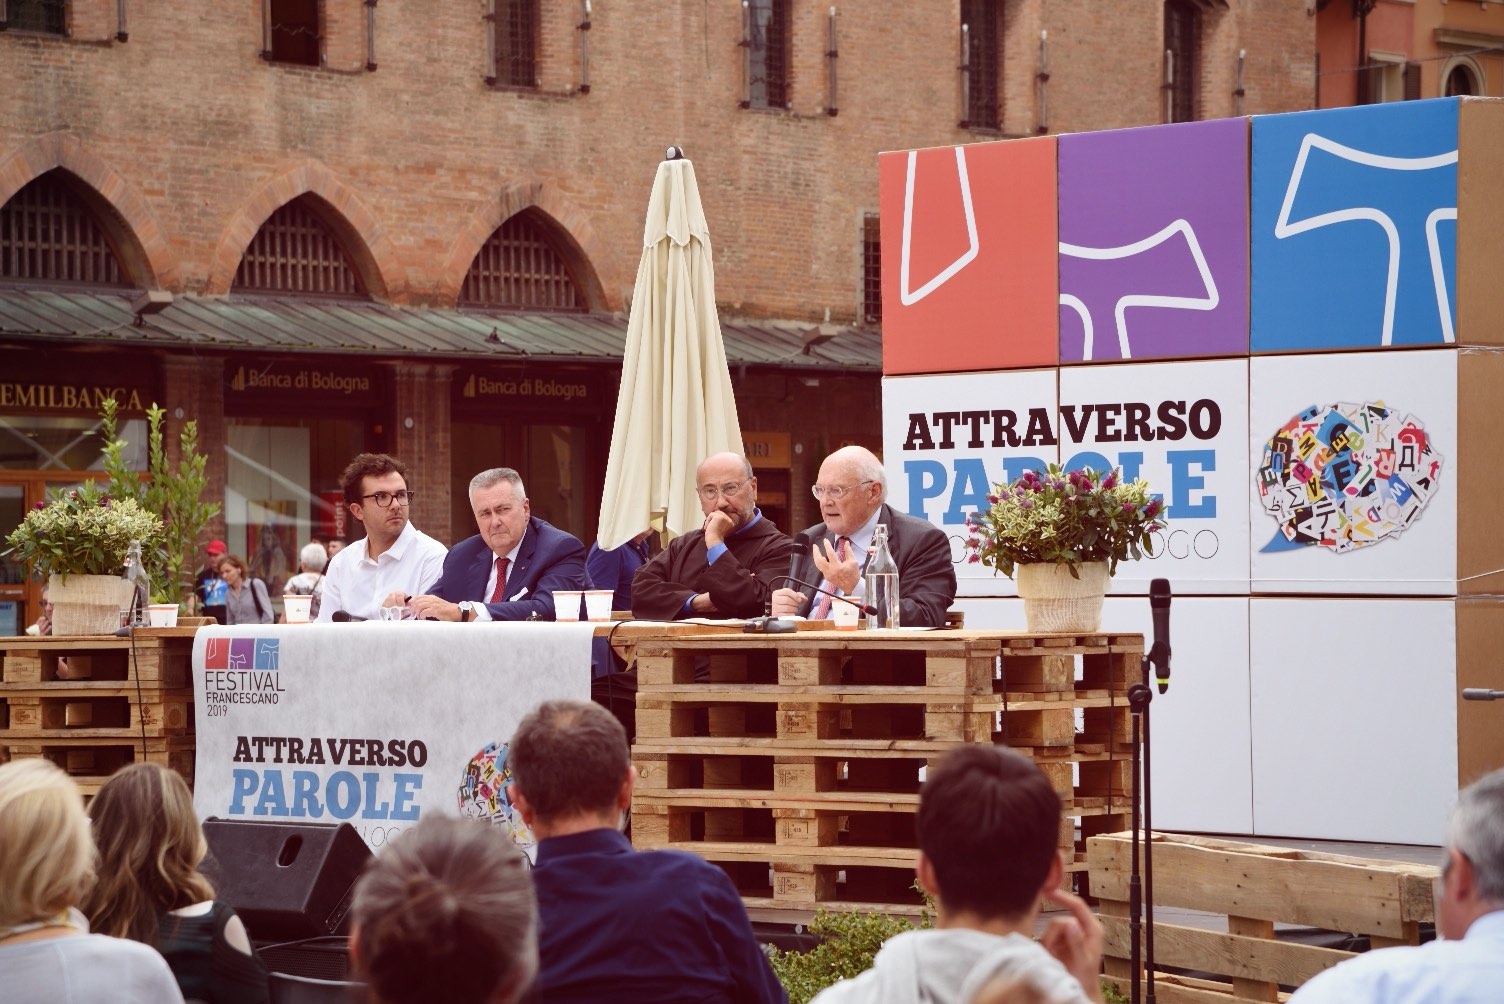 Romagnoli S.p.A. confirms its support for Festival Francescano